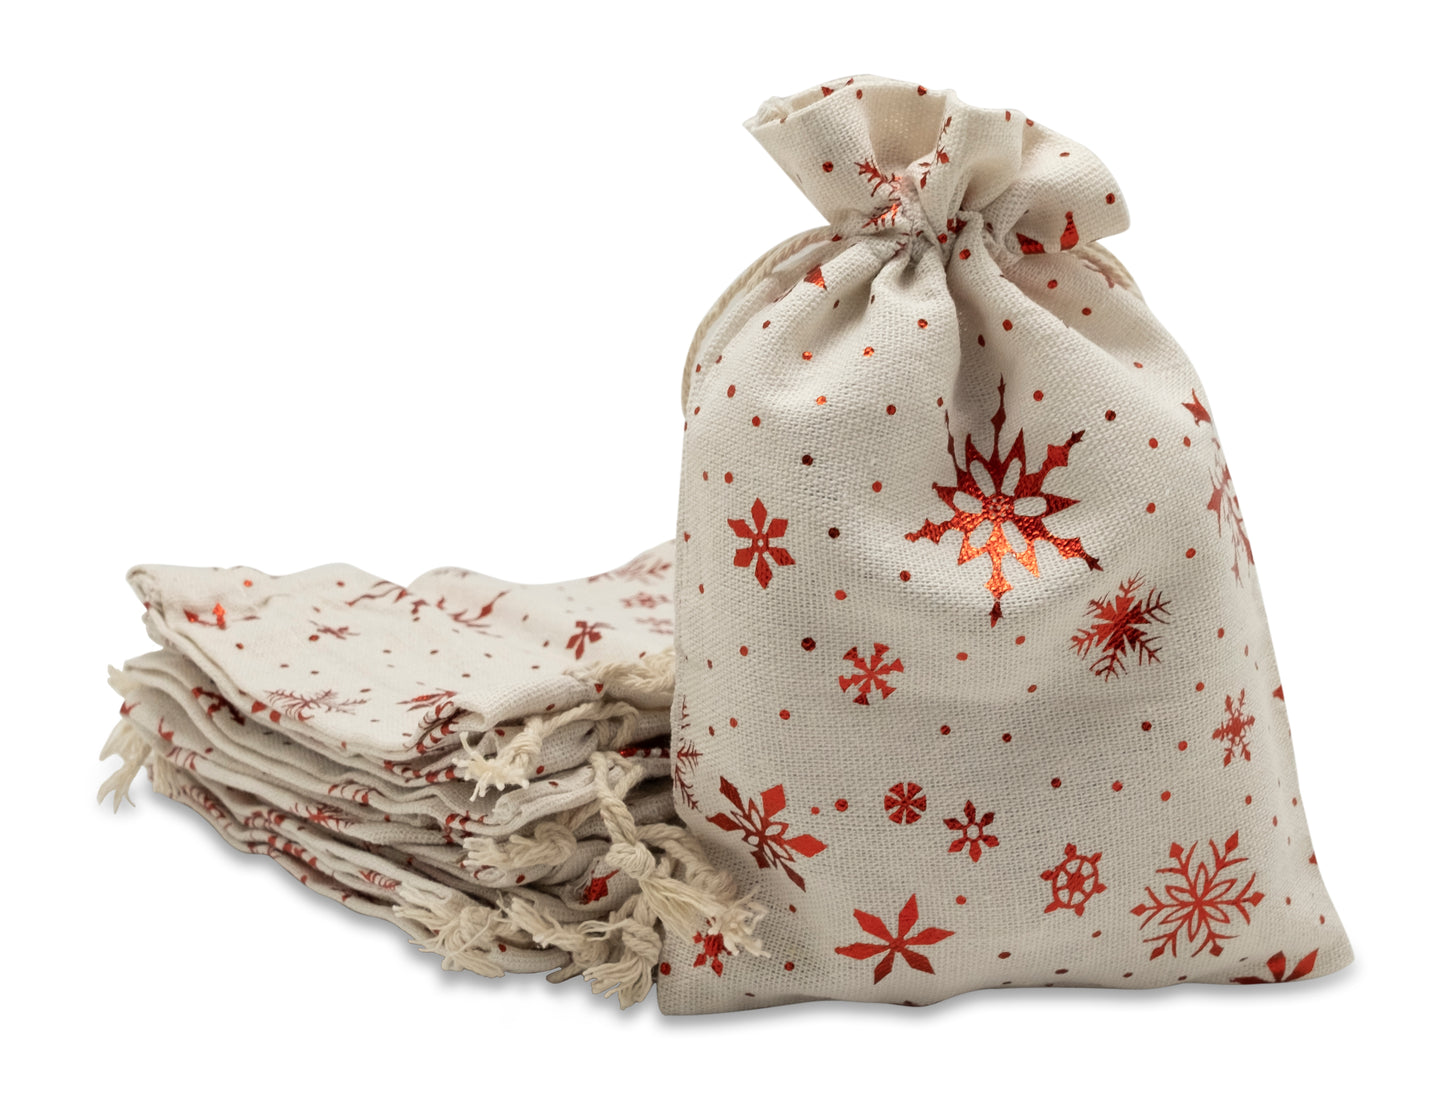 12" x 16" Cotton Muslin Red Snowflake Drawstring Gift Bags